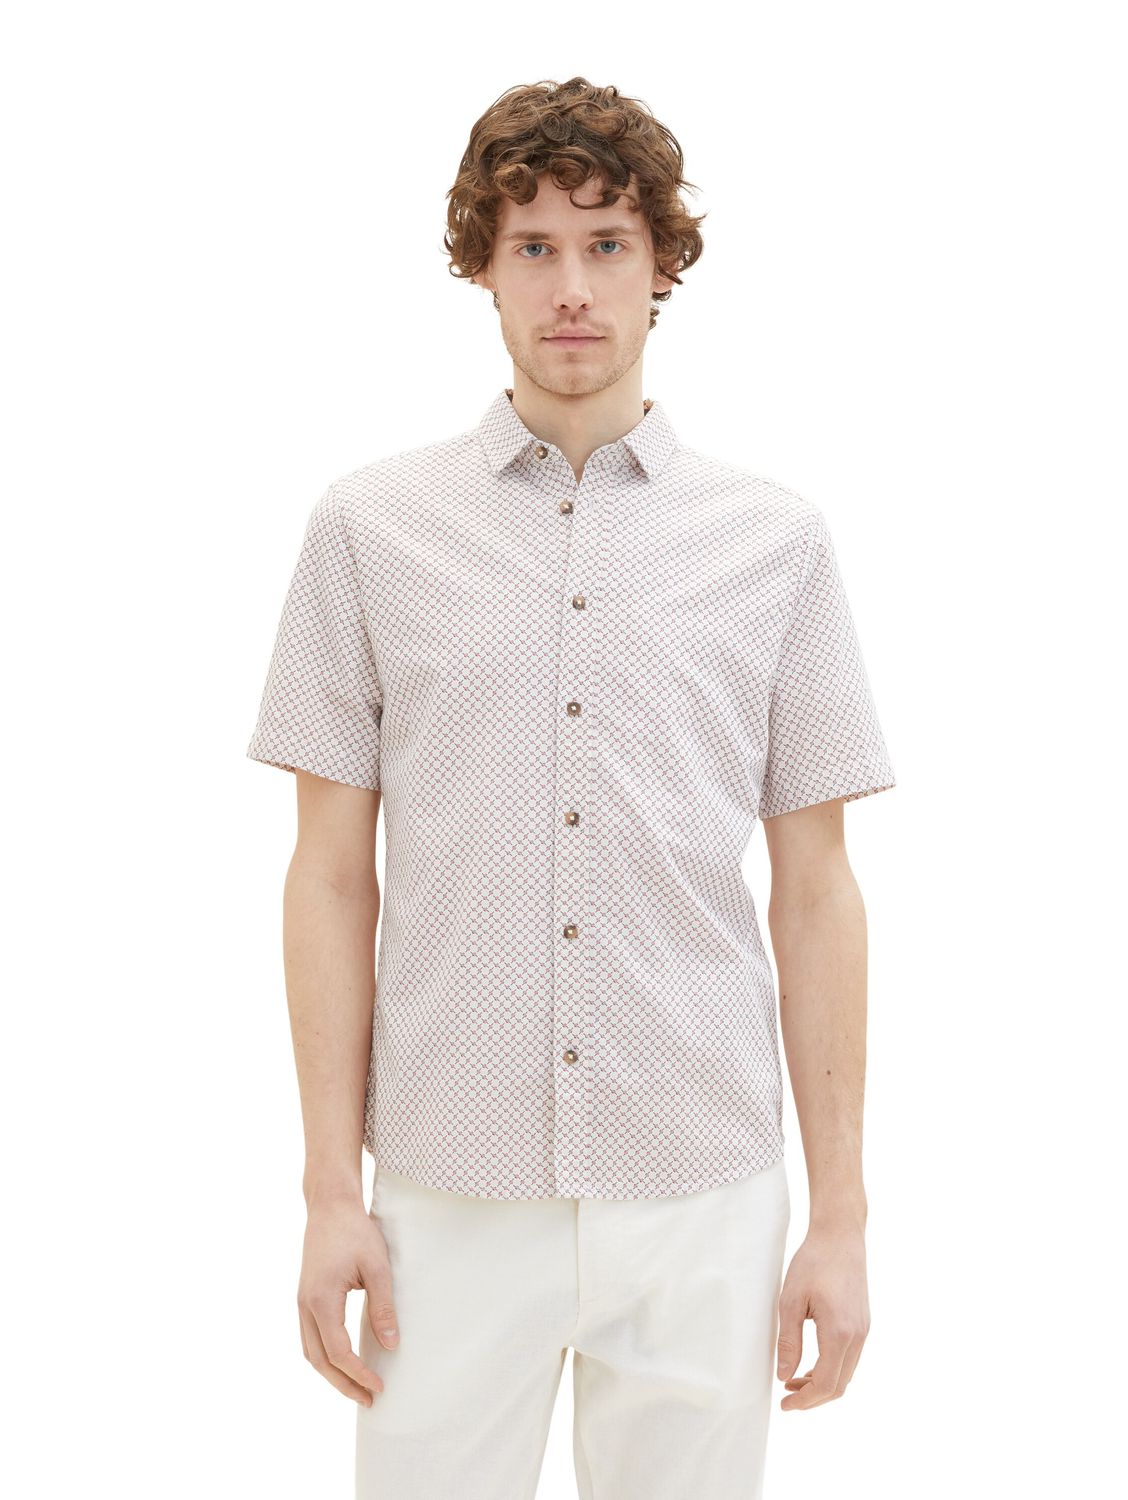 Рубашка Tom Tailor PRINTED, разноцветный рубашка с коротким рукавом tom tailor 1029812 fitted printed stretch серый